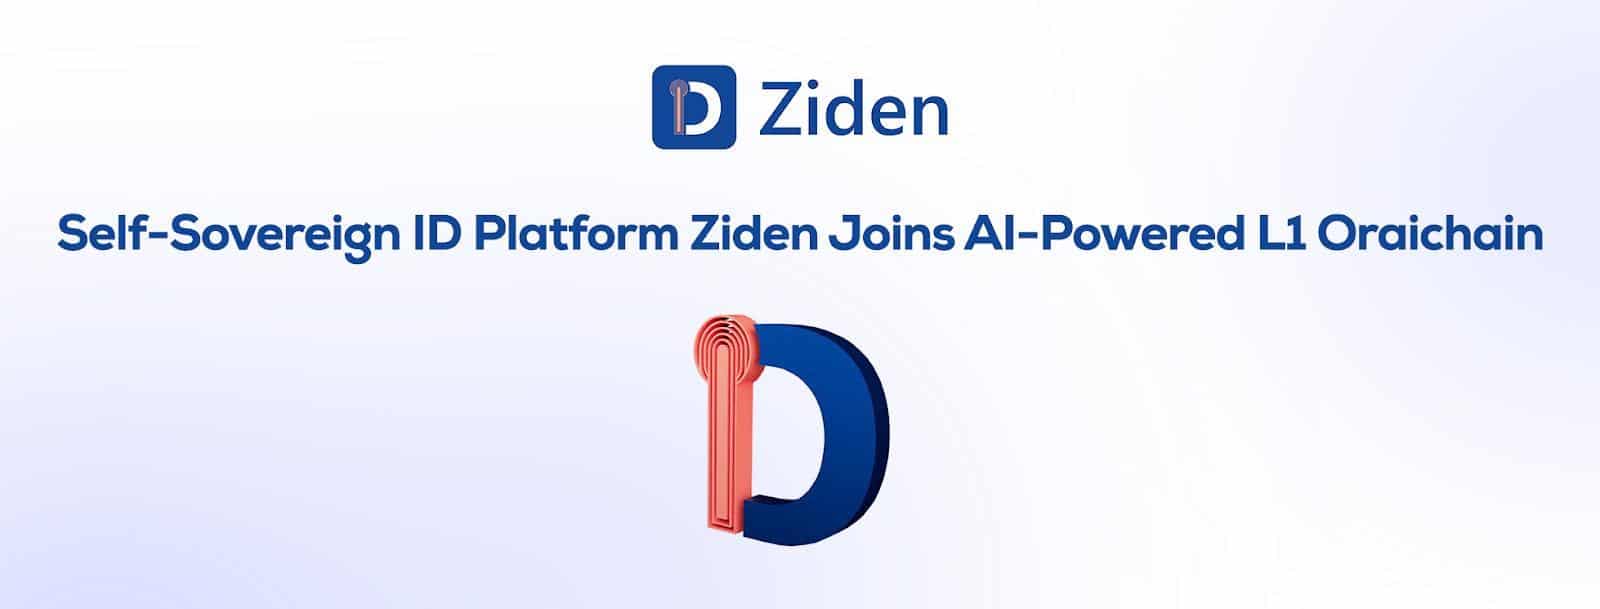 Self-Sovereign ID Platform Ziden Joins AI-Powered L1 Oraichain